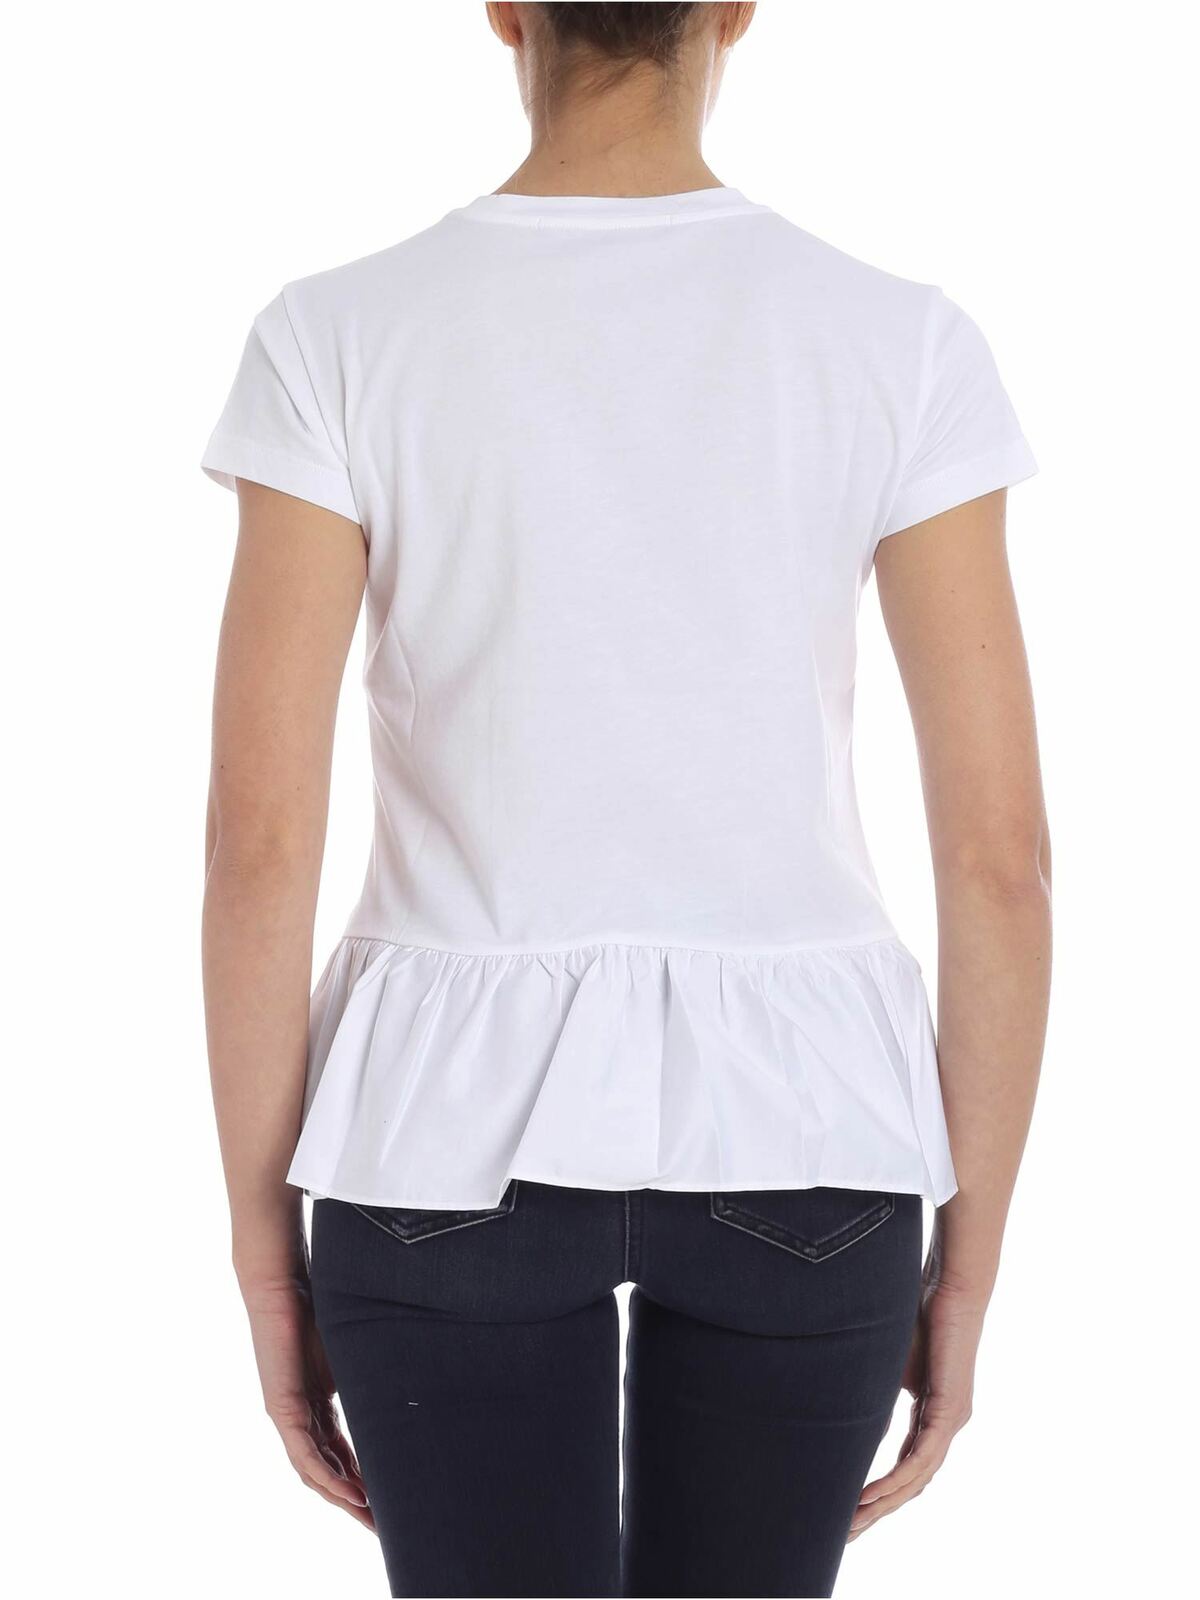 Shop Karl Lagerfeld Logo White T-shirt